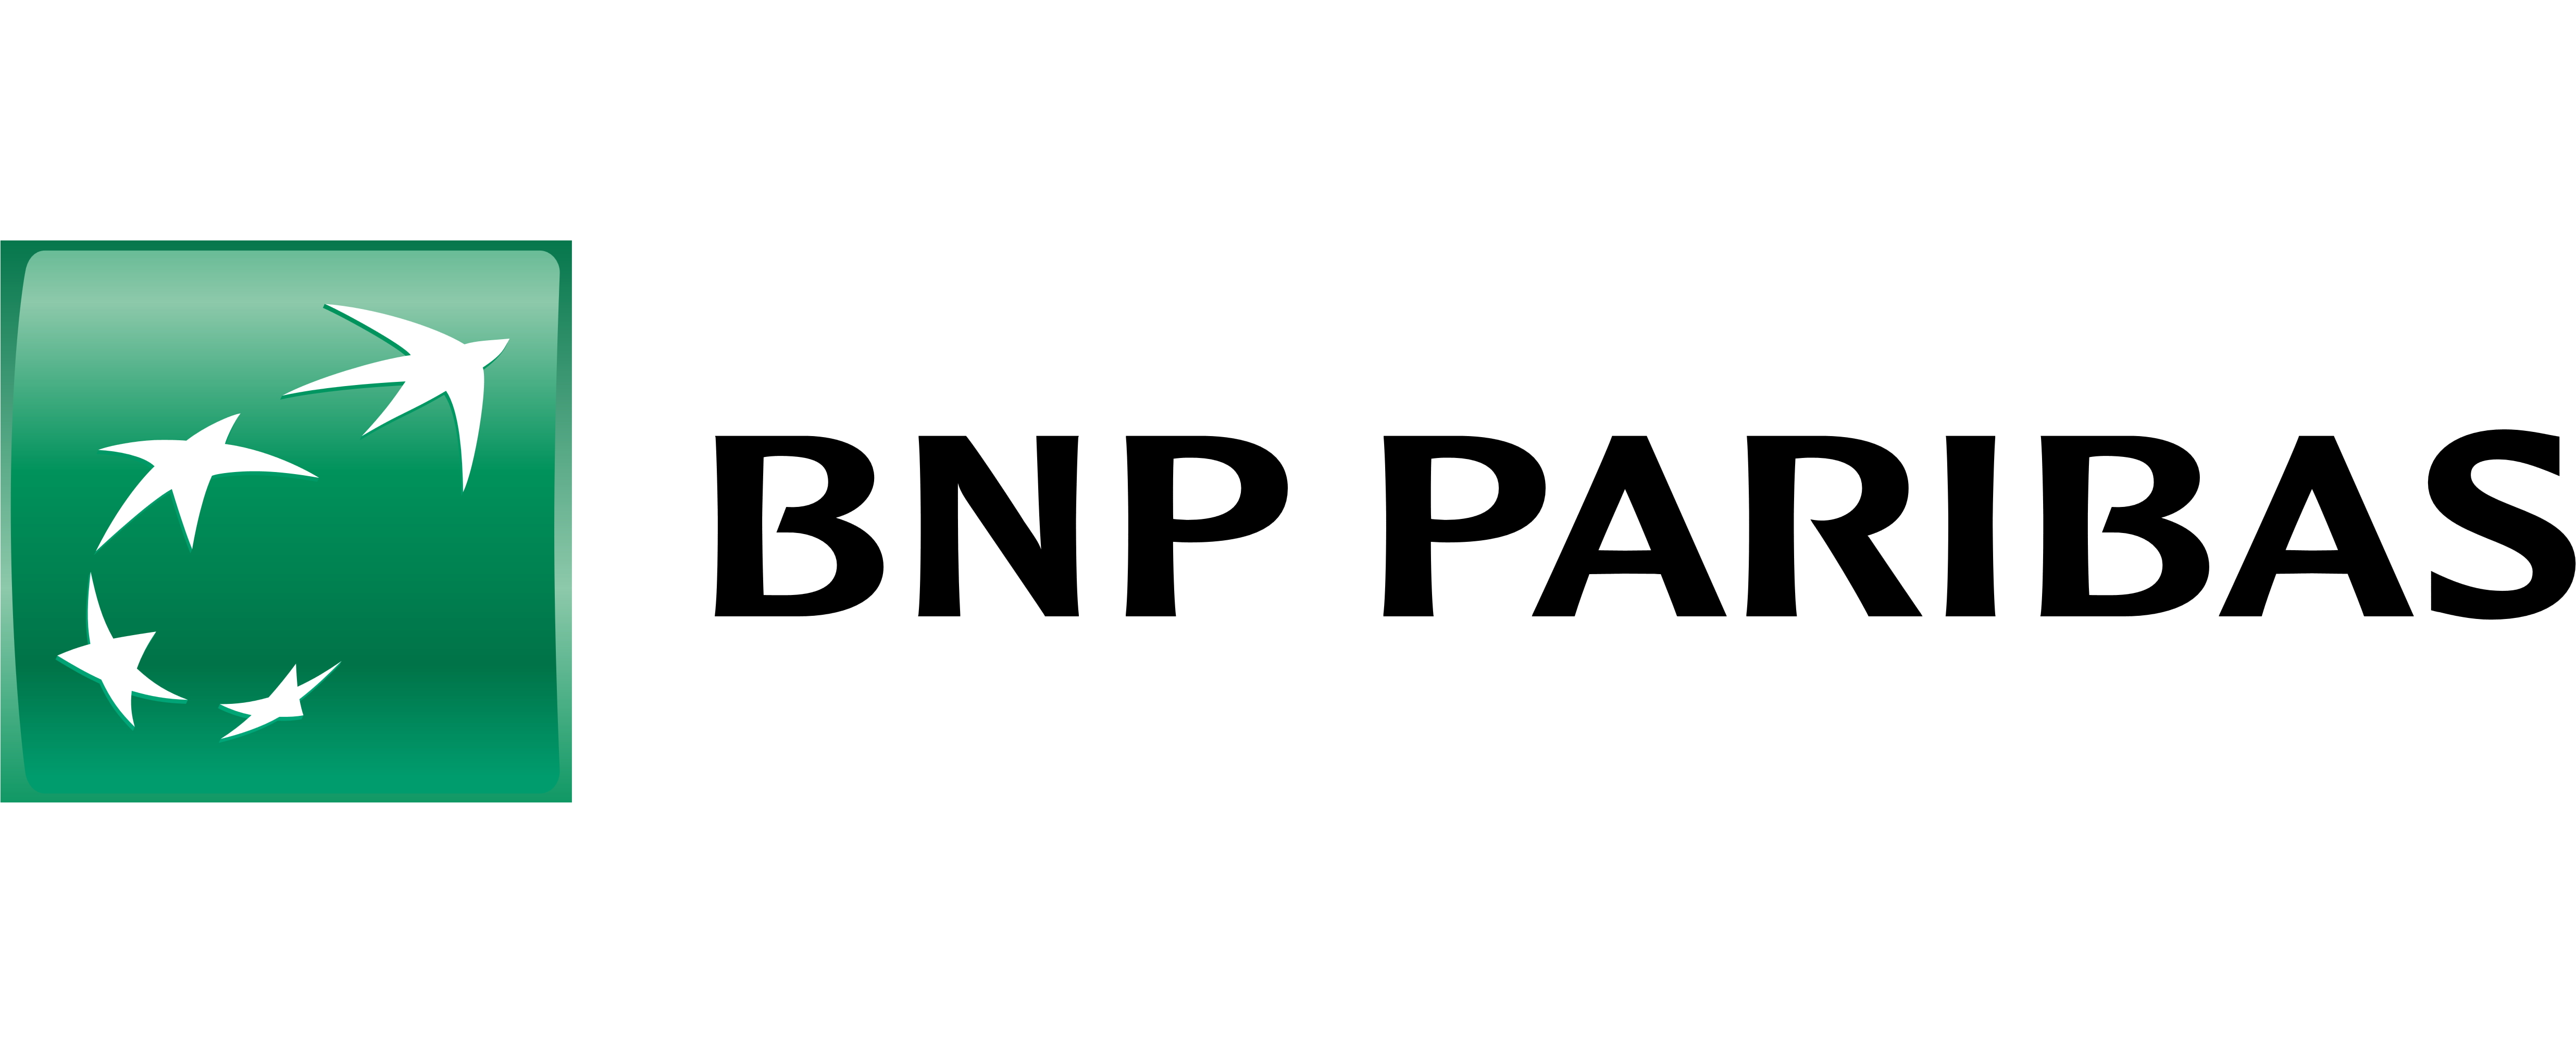 Bnp paribas logo